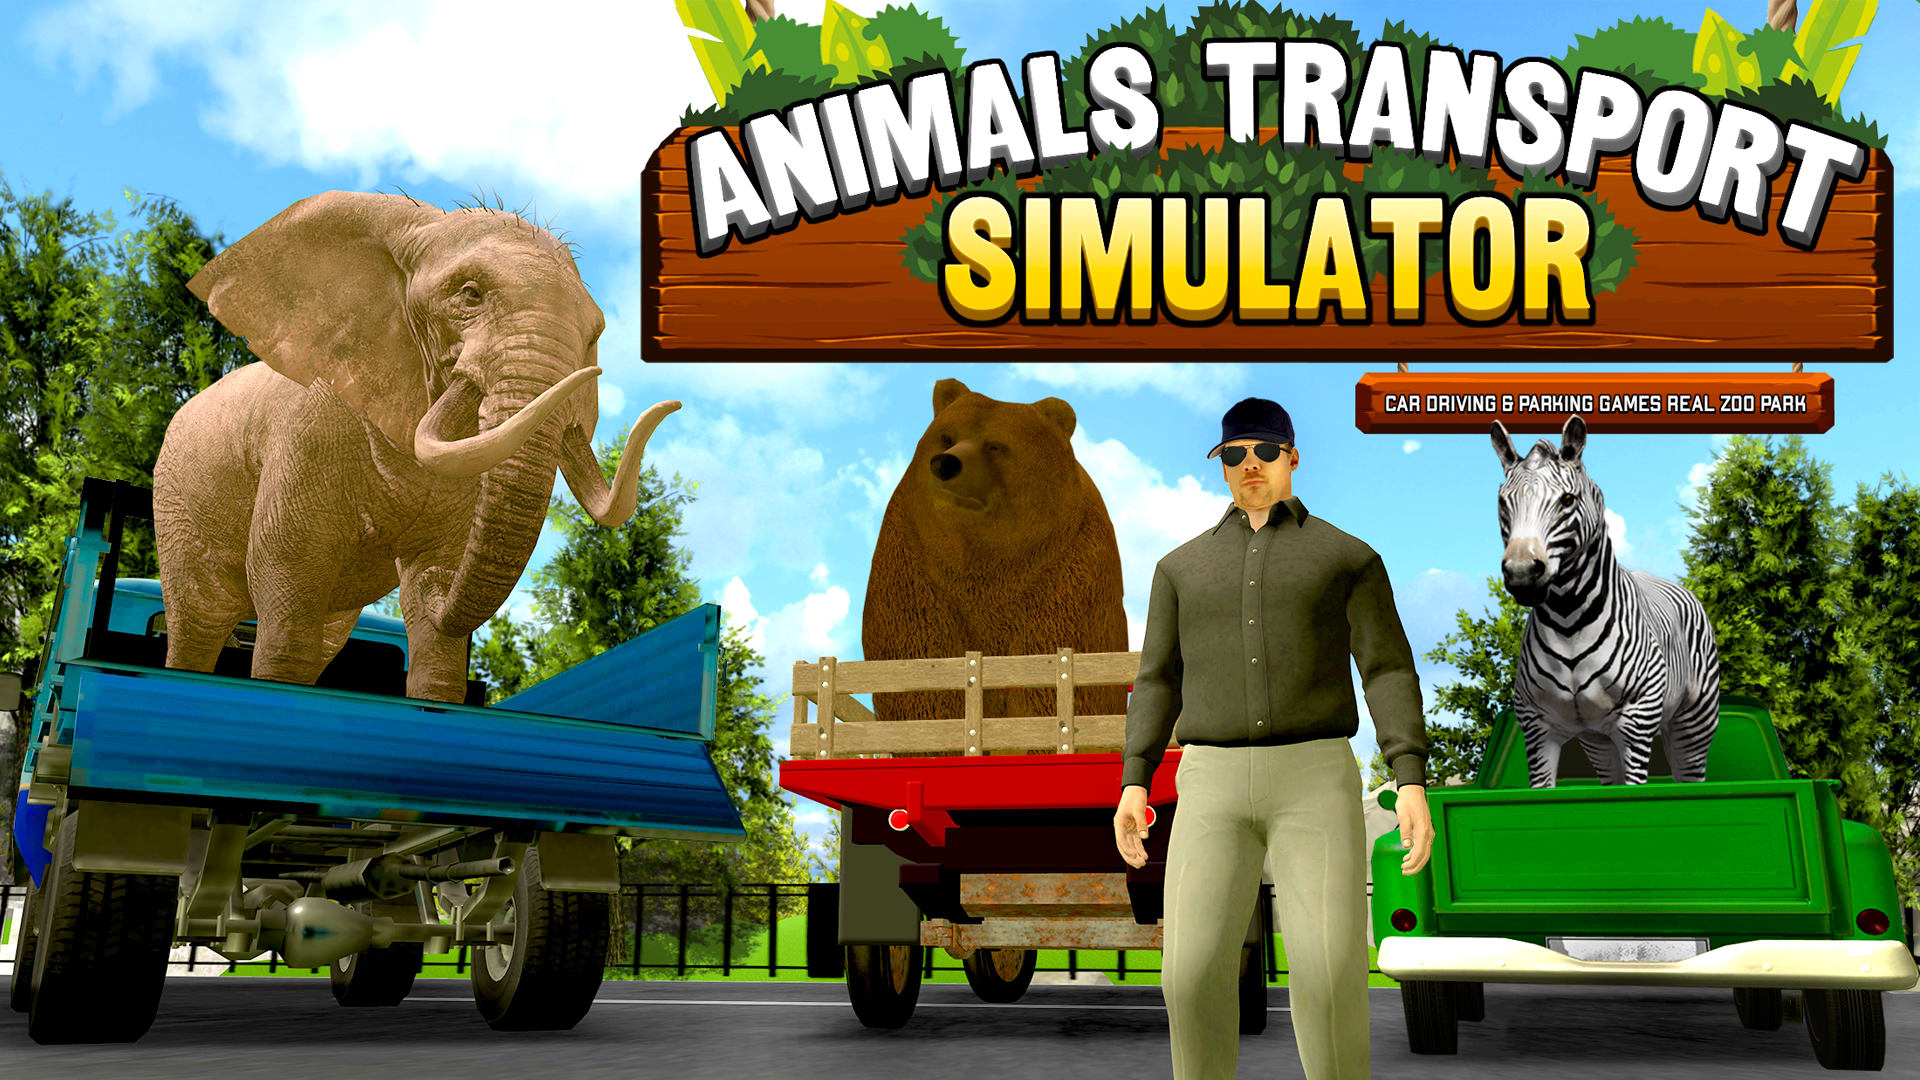 Animals Transport Simulator - Car Driving & Parking Games Real Zoo Park 1